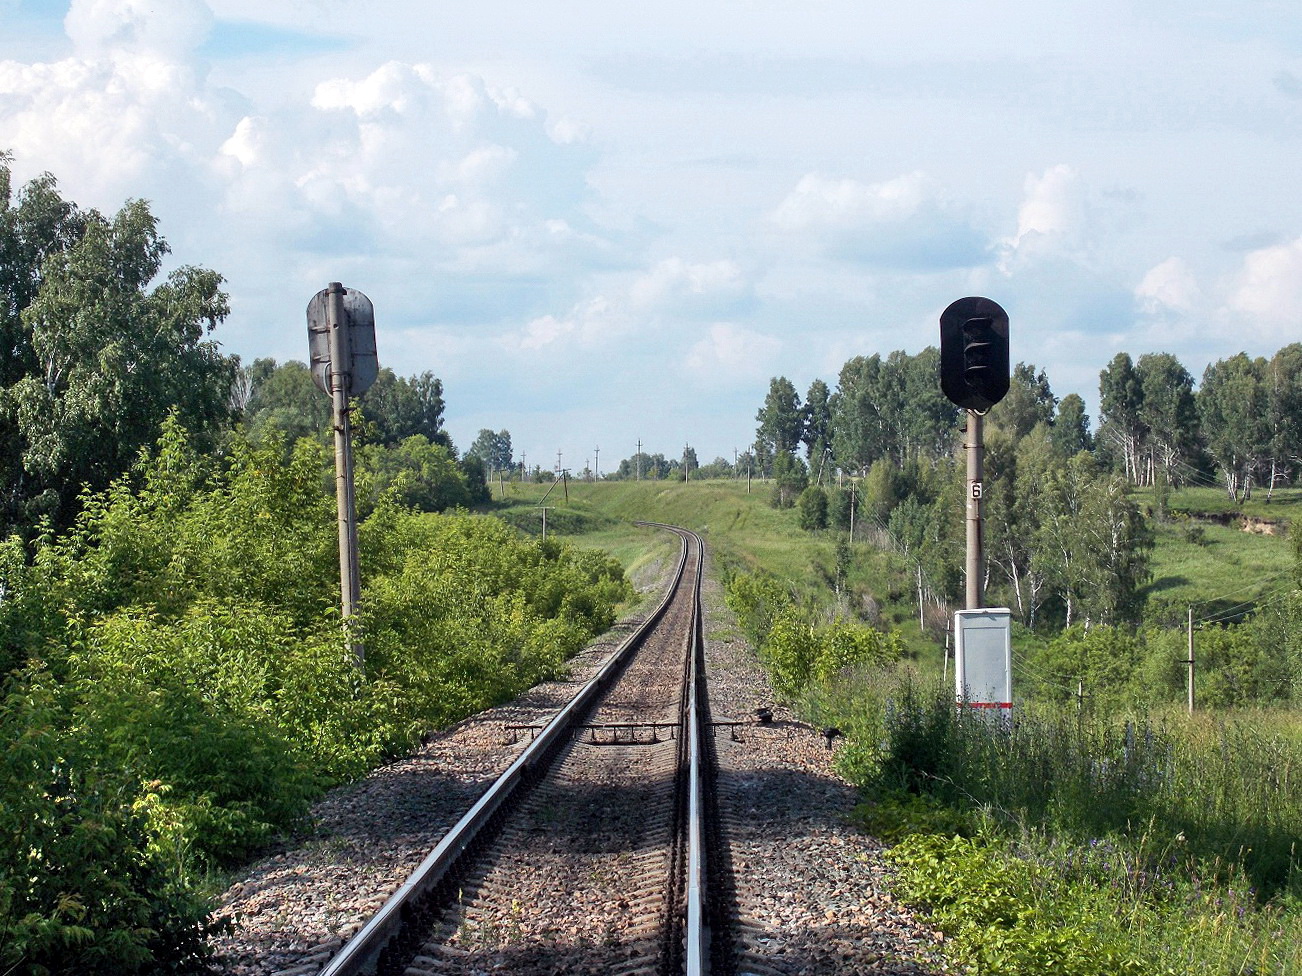 West Siberian railway — Stations & ways